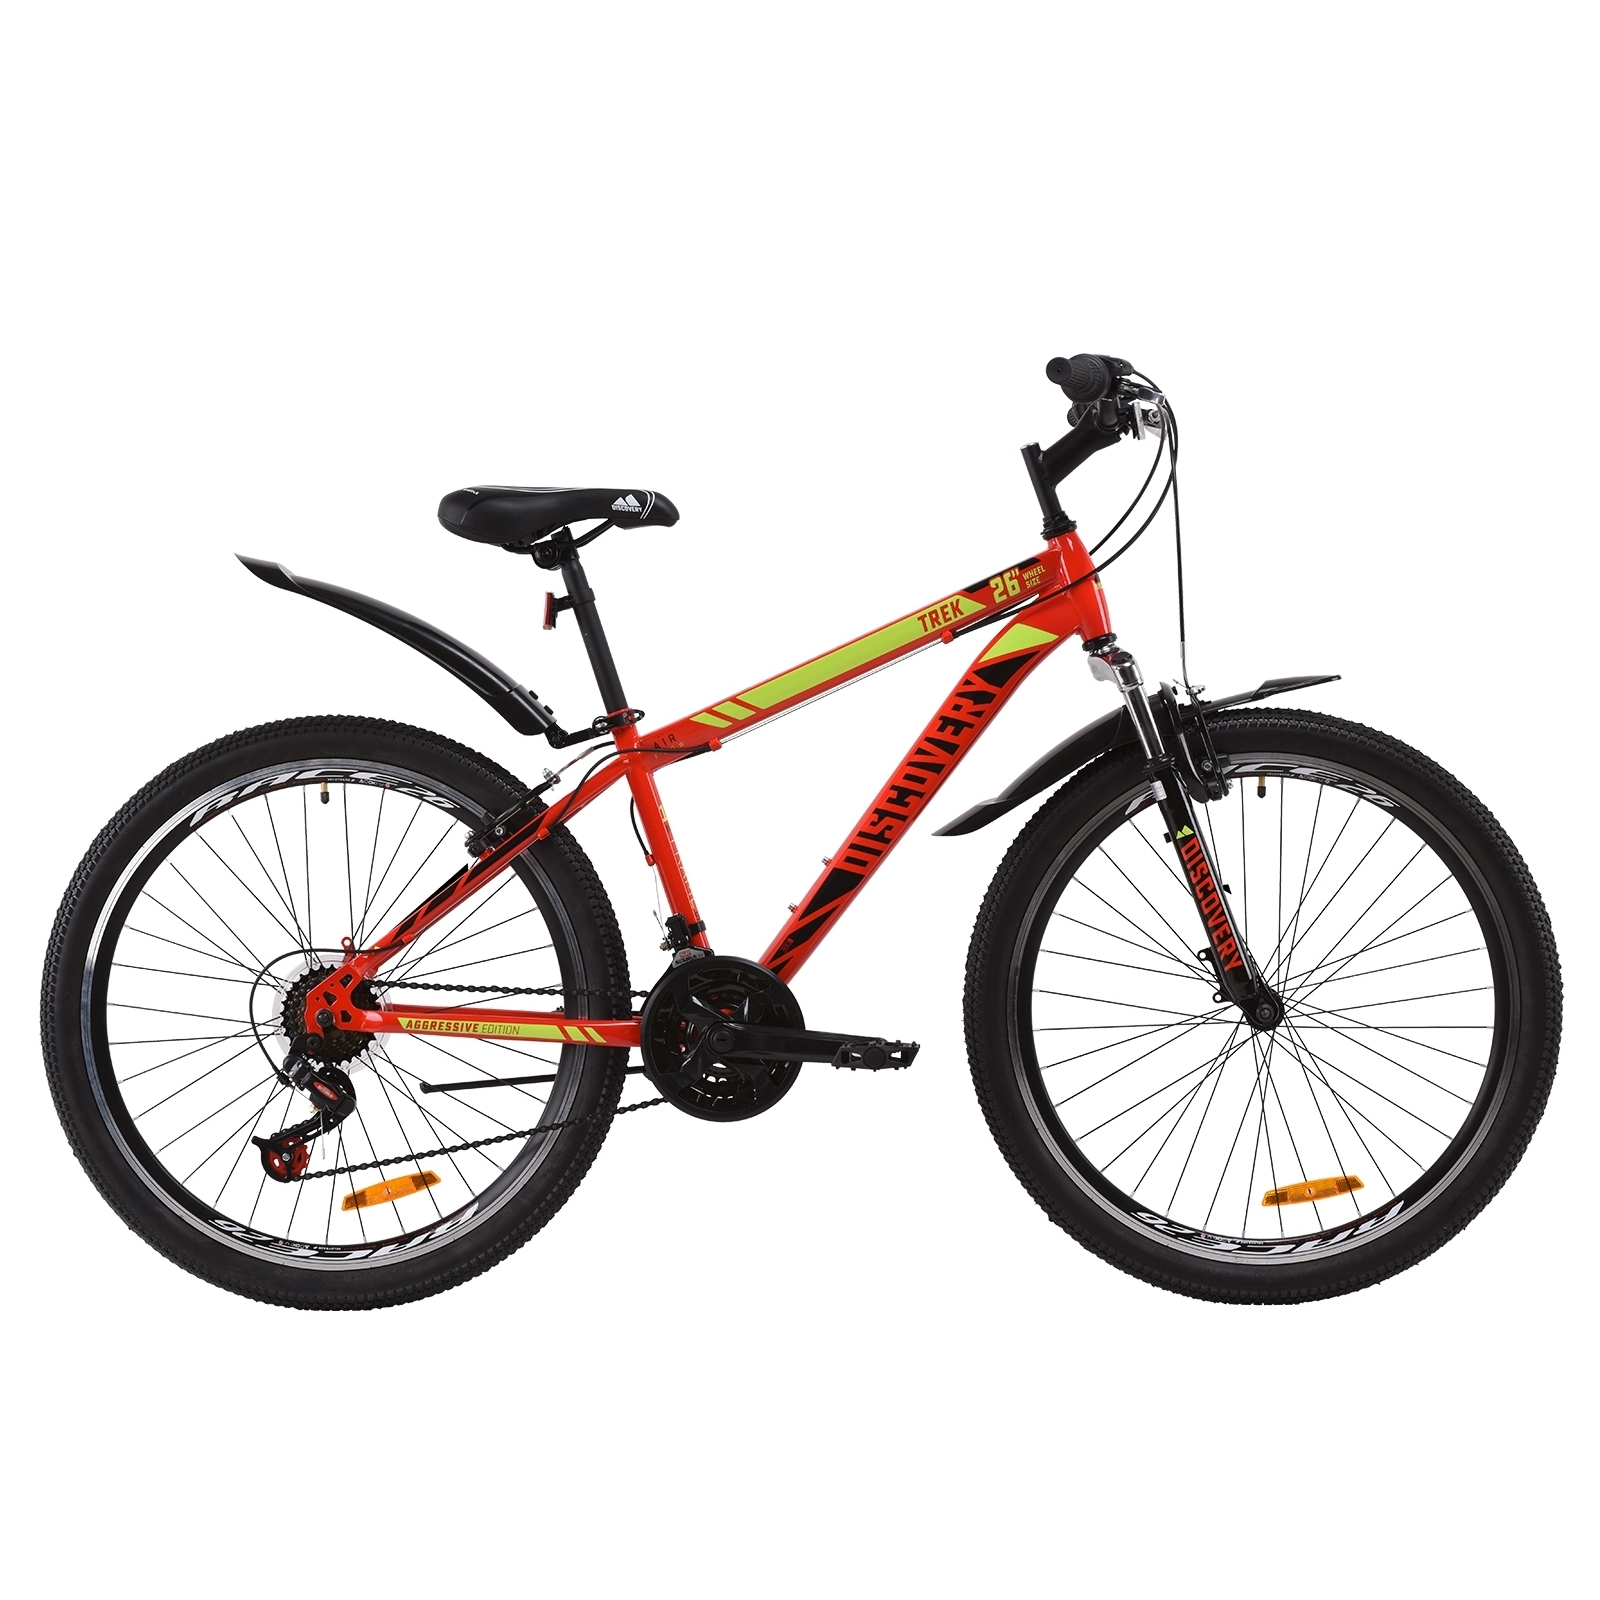 Велосипед Discovery 26" TREK AM Vbr рама-13" St 2020 красно-черный с салатовым (OPS-DIS-26-263)